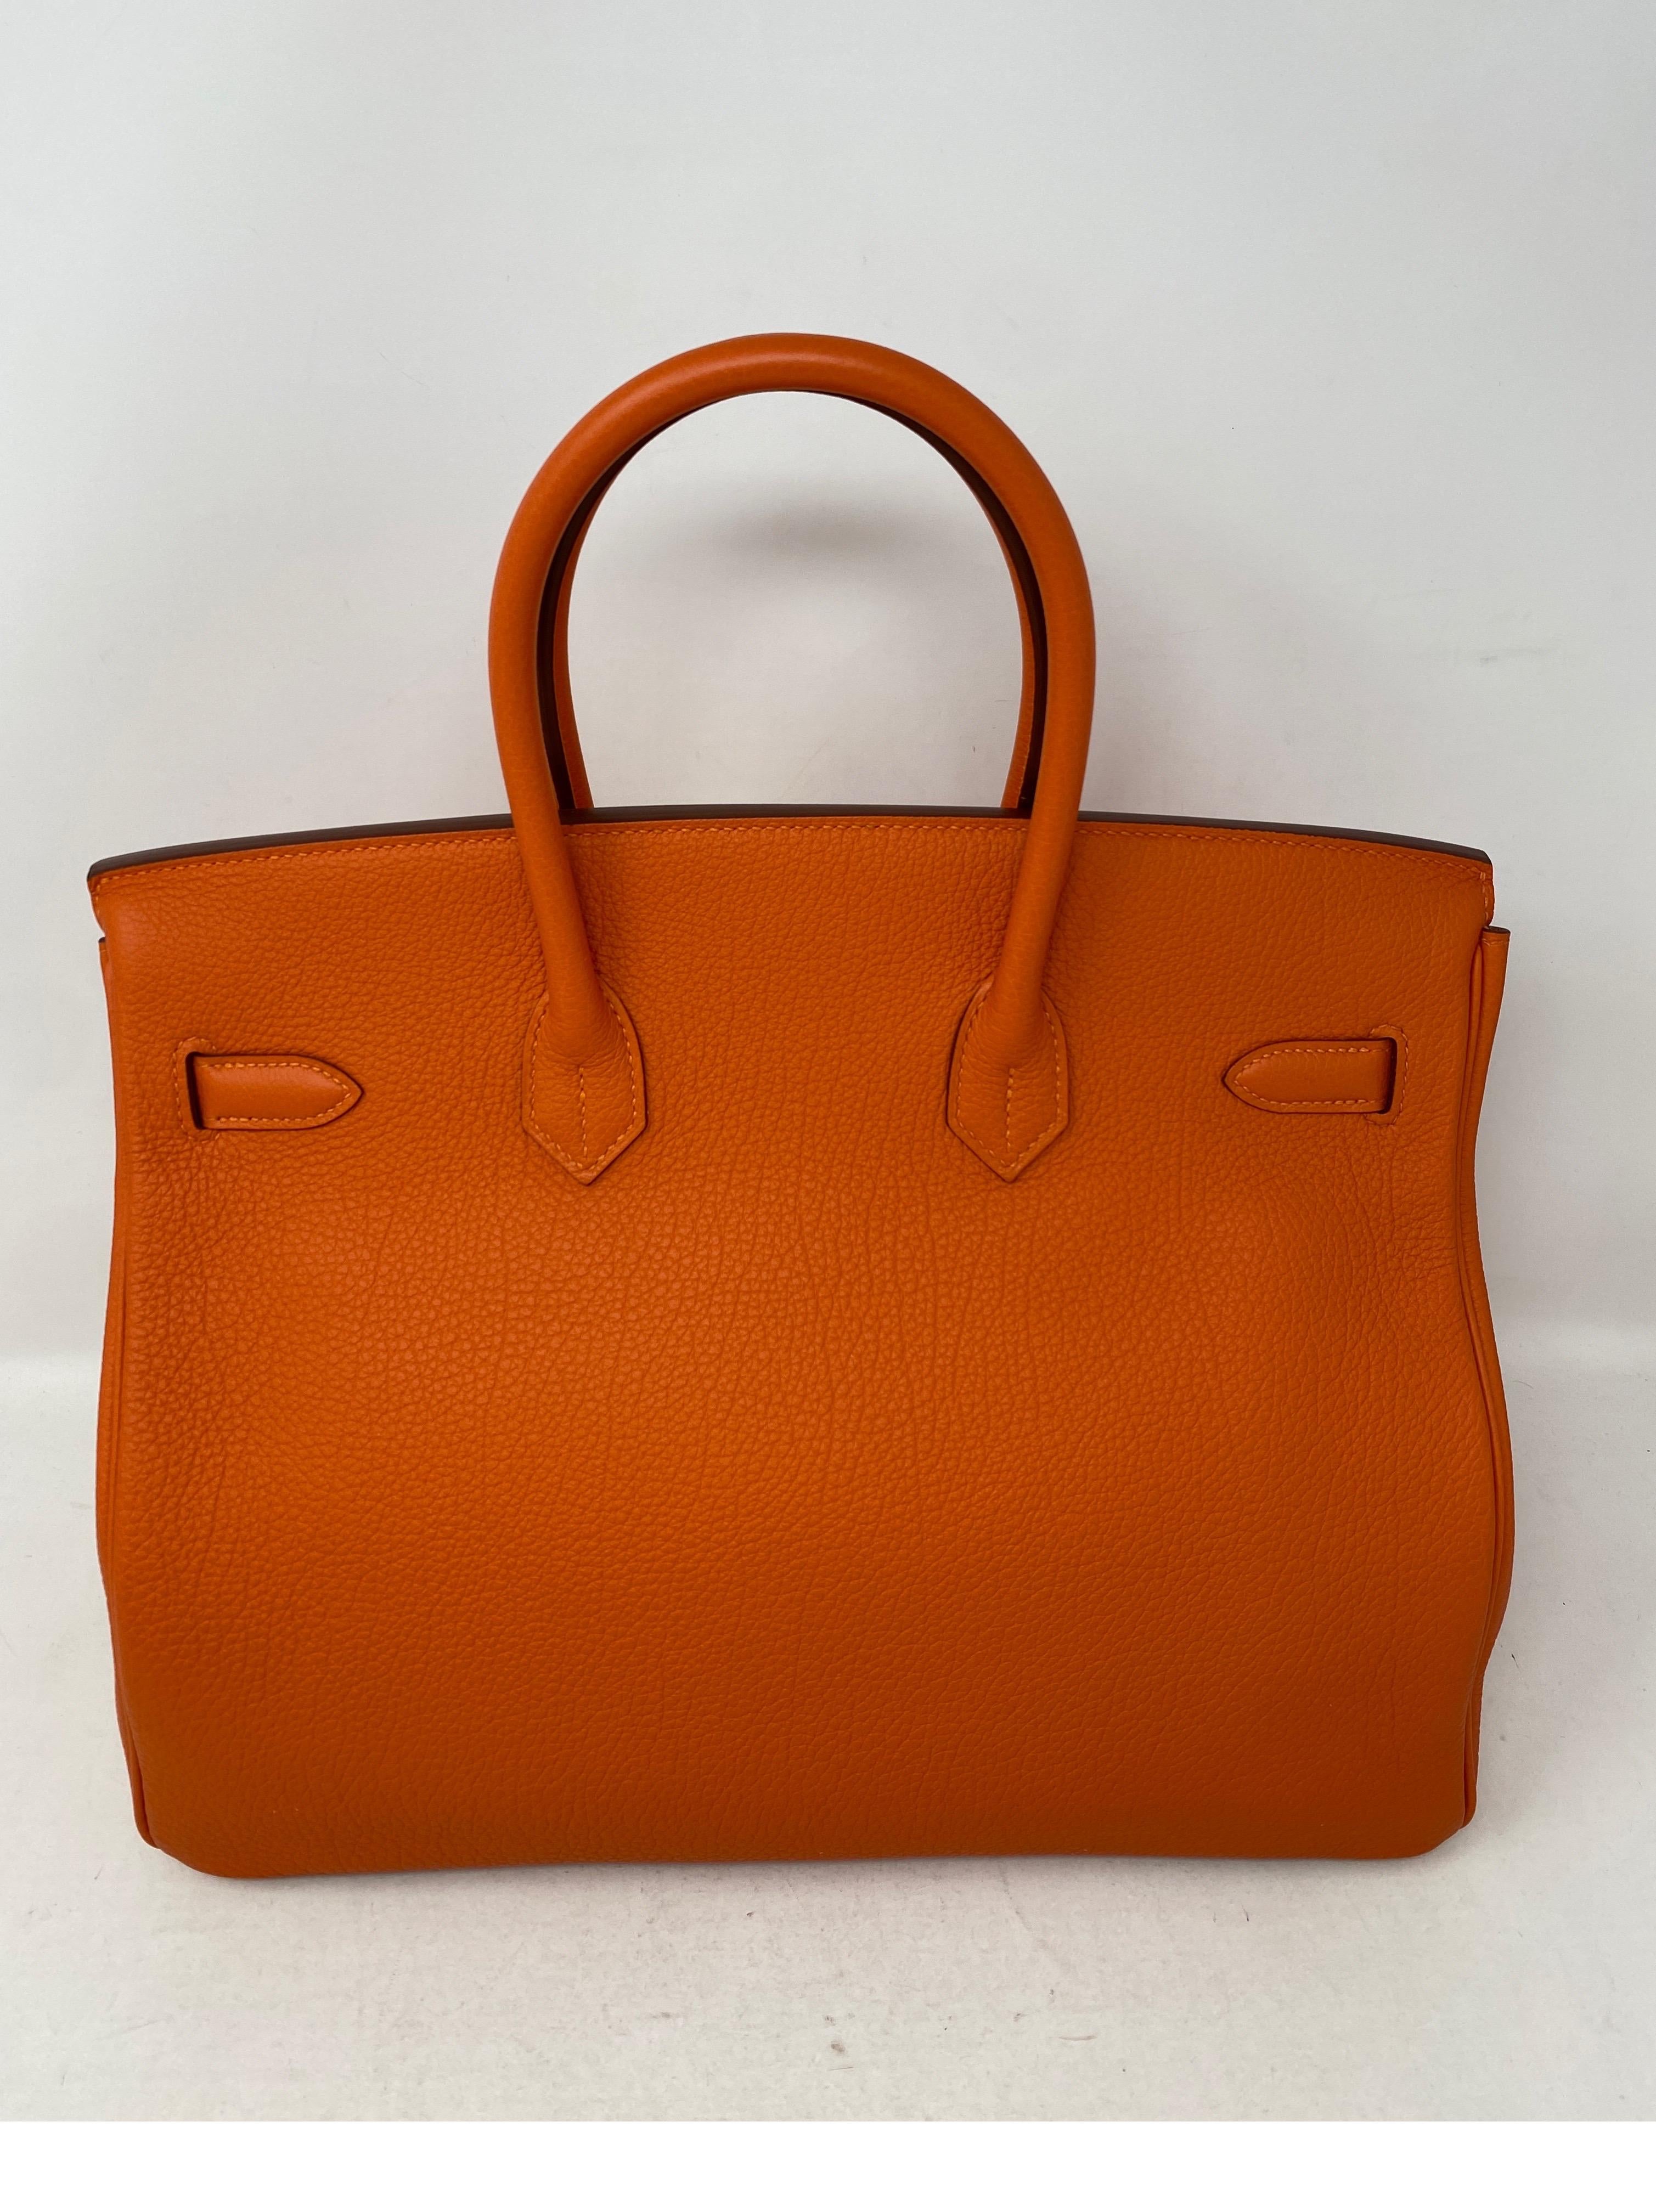 Red Hermes Birkin Feu Orange 35 Bag